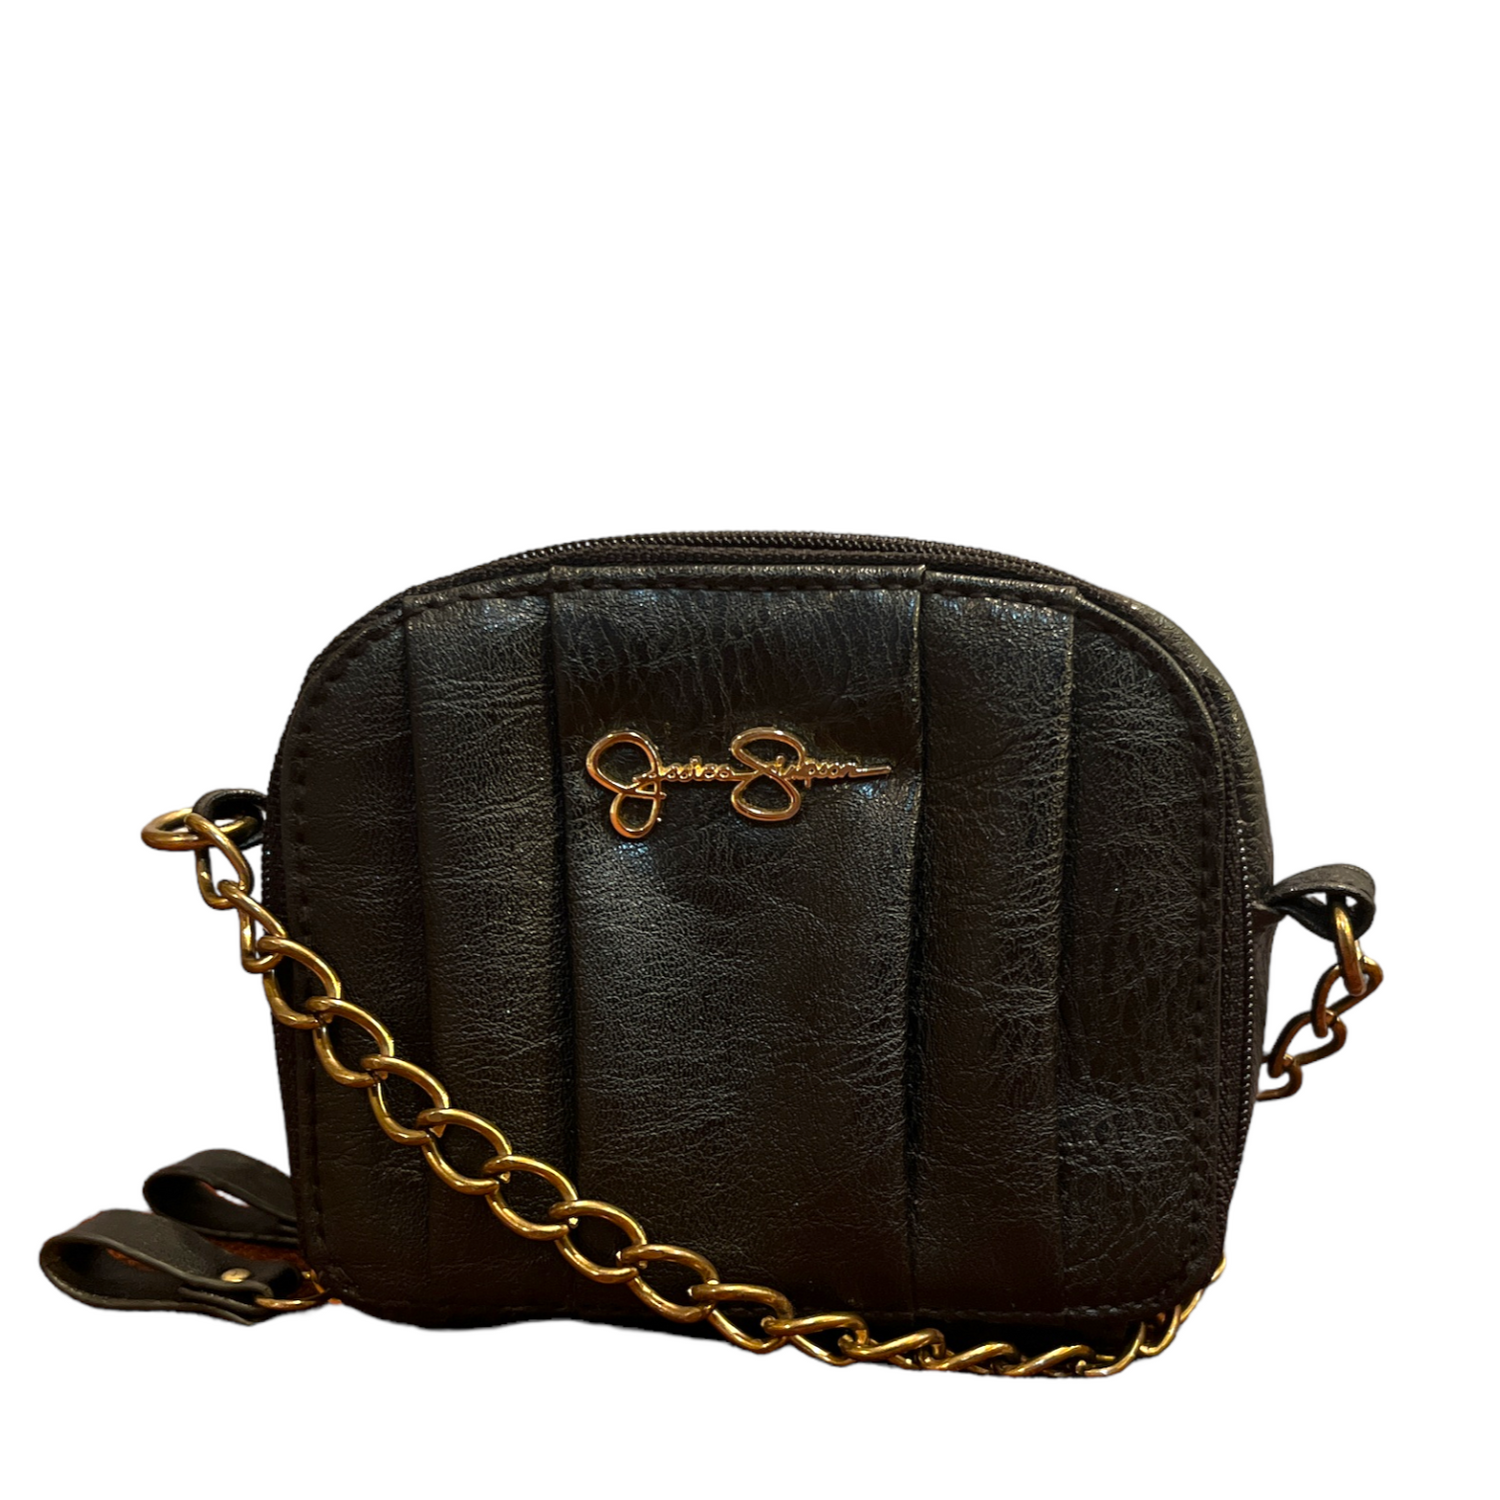 Jessica Simpson Handbags On Sale Up To 90% Off Retail | ThredUp